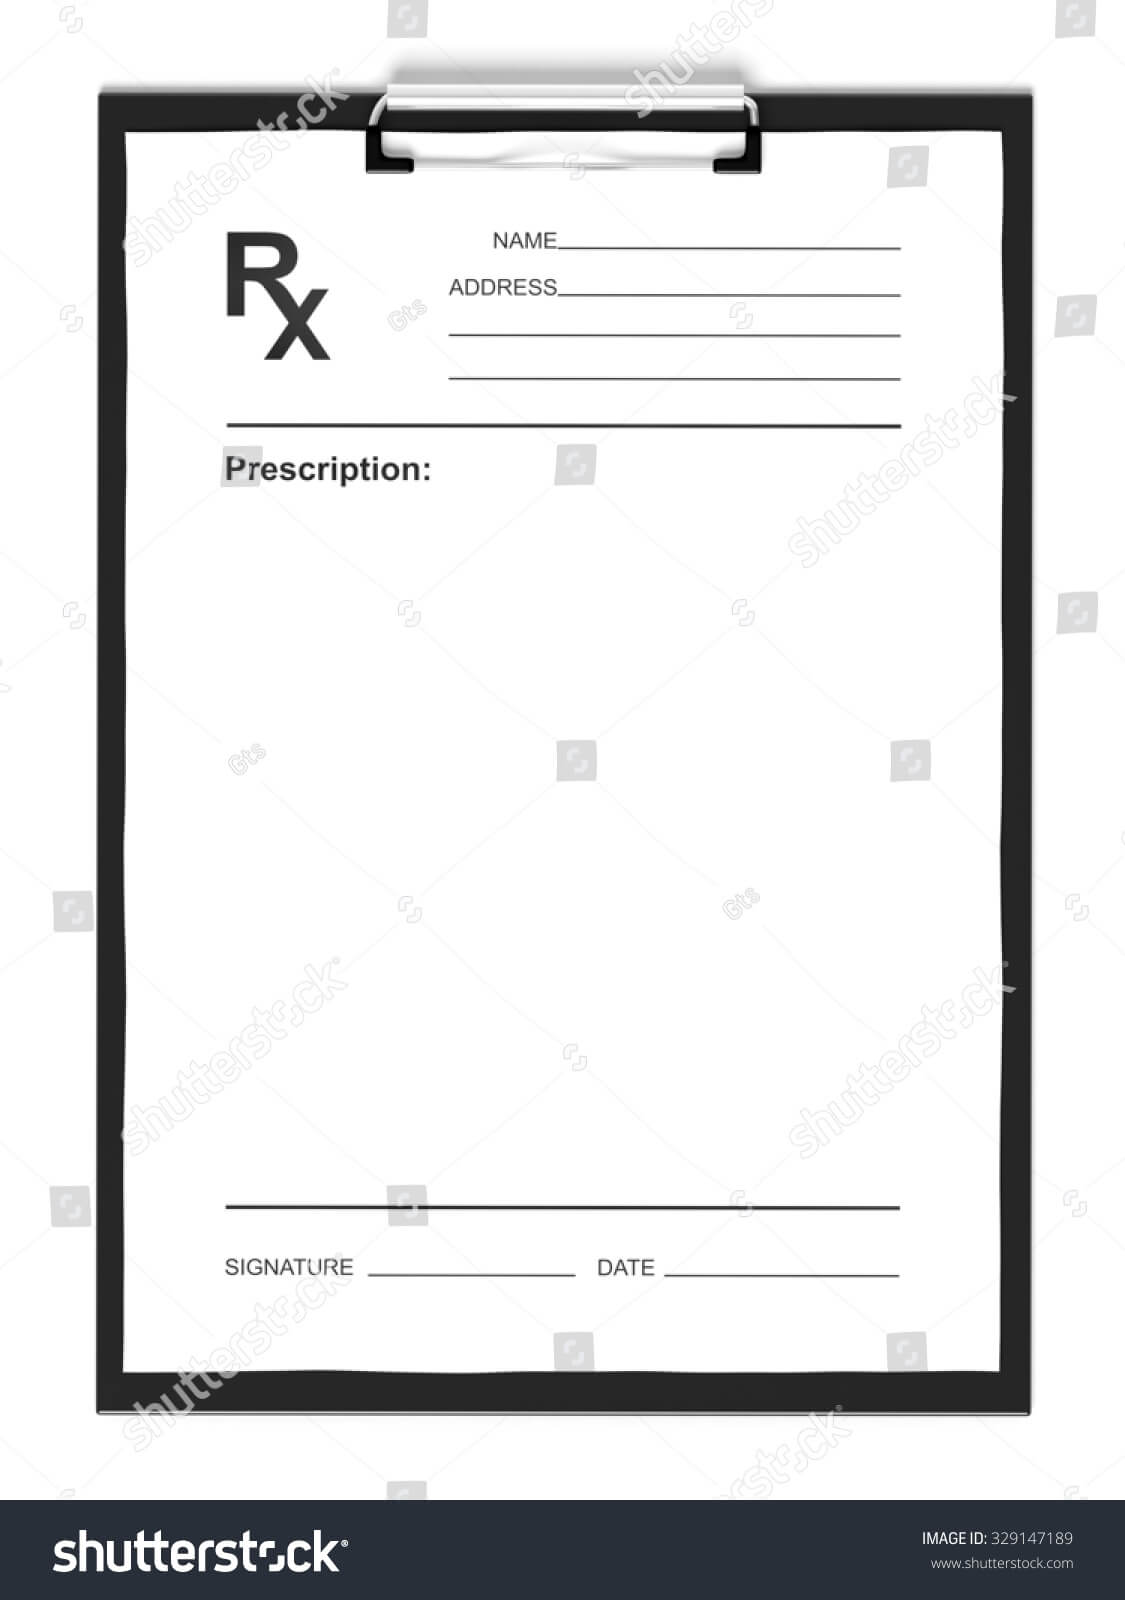 26 Images Of Blank Prescription Form Doctor Template In Blank Prescription Pad Template